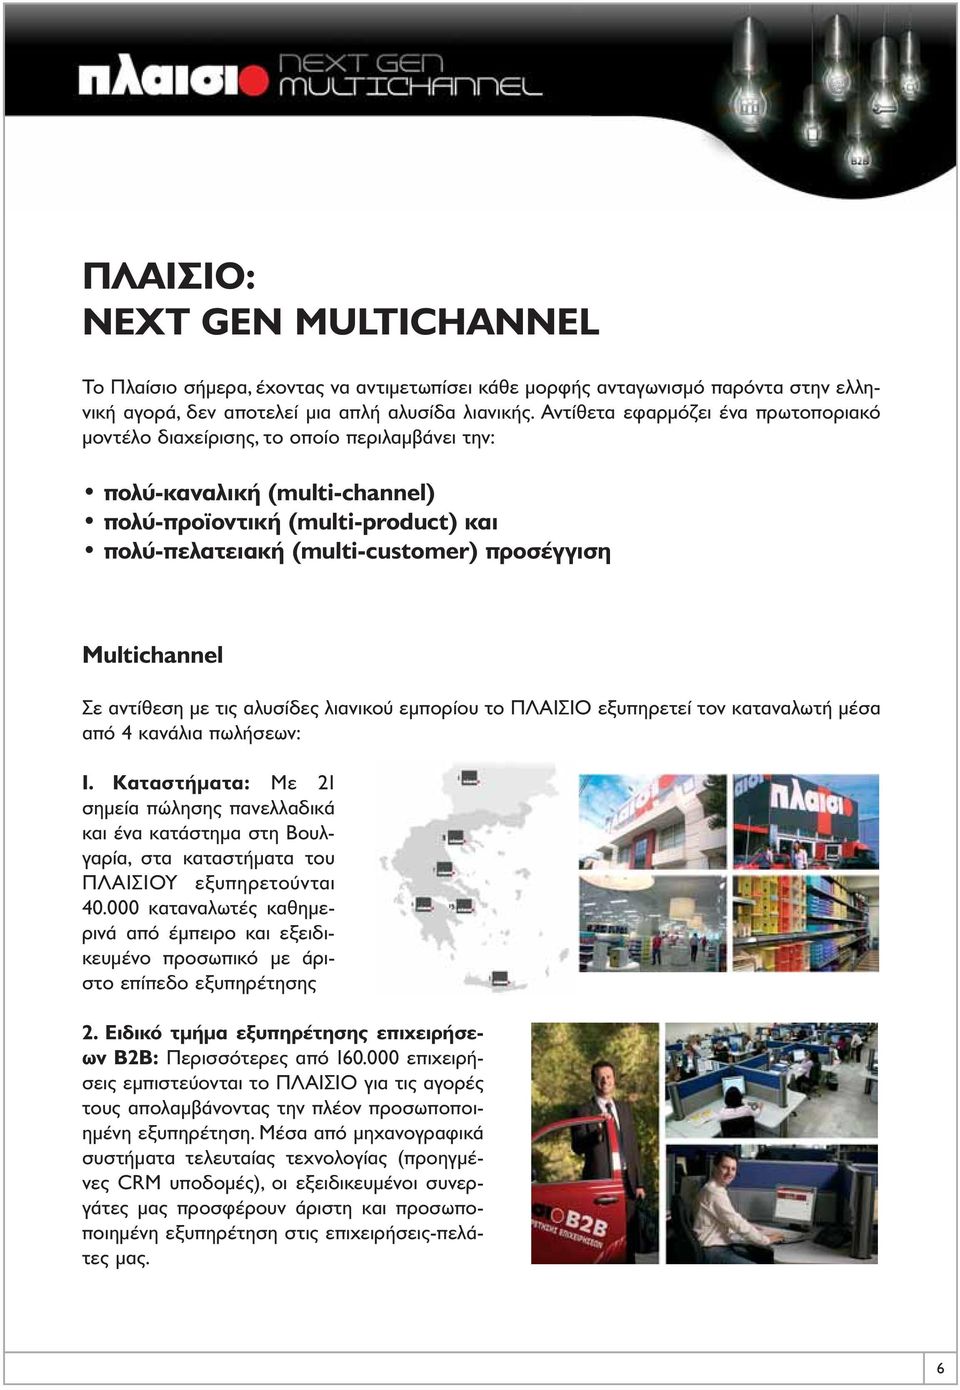 Multichannel Σε αντίθεση με τις αλυσίδες λιανικού εμπορίου το ΠΛΑΙΣΙΟ εξυπηρετεί τον καταναλωτή μέσα από 4 κανάλια πωλήσεων: 1.